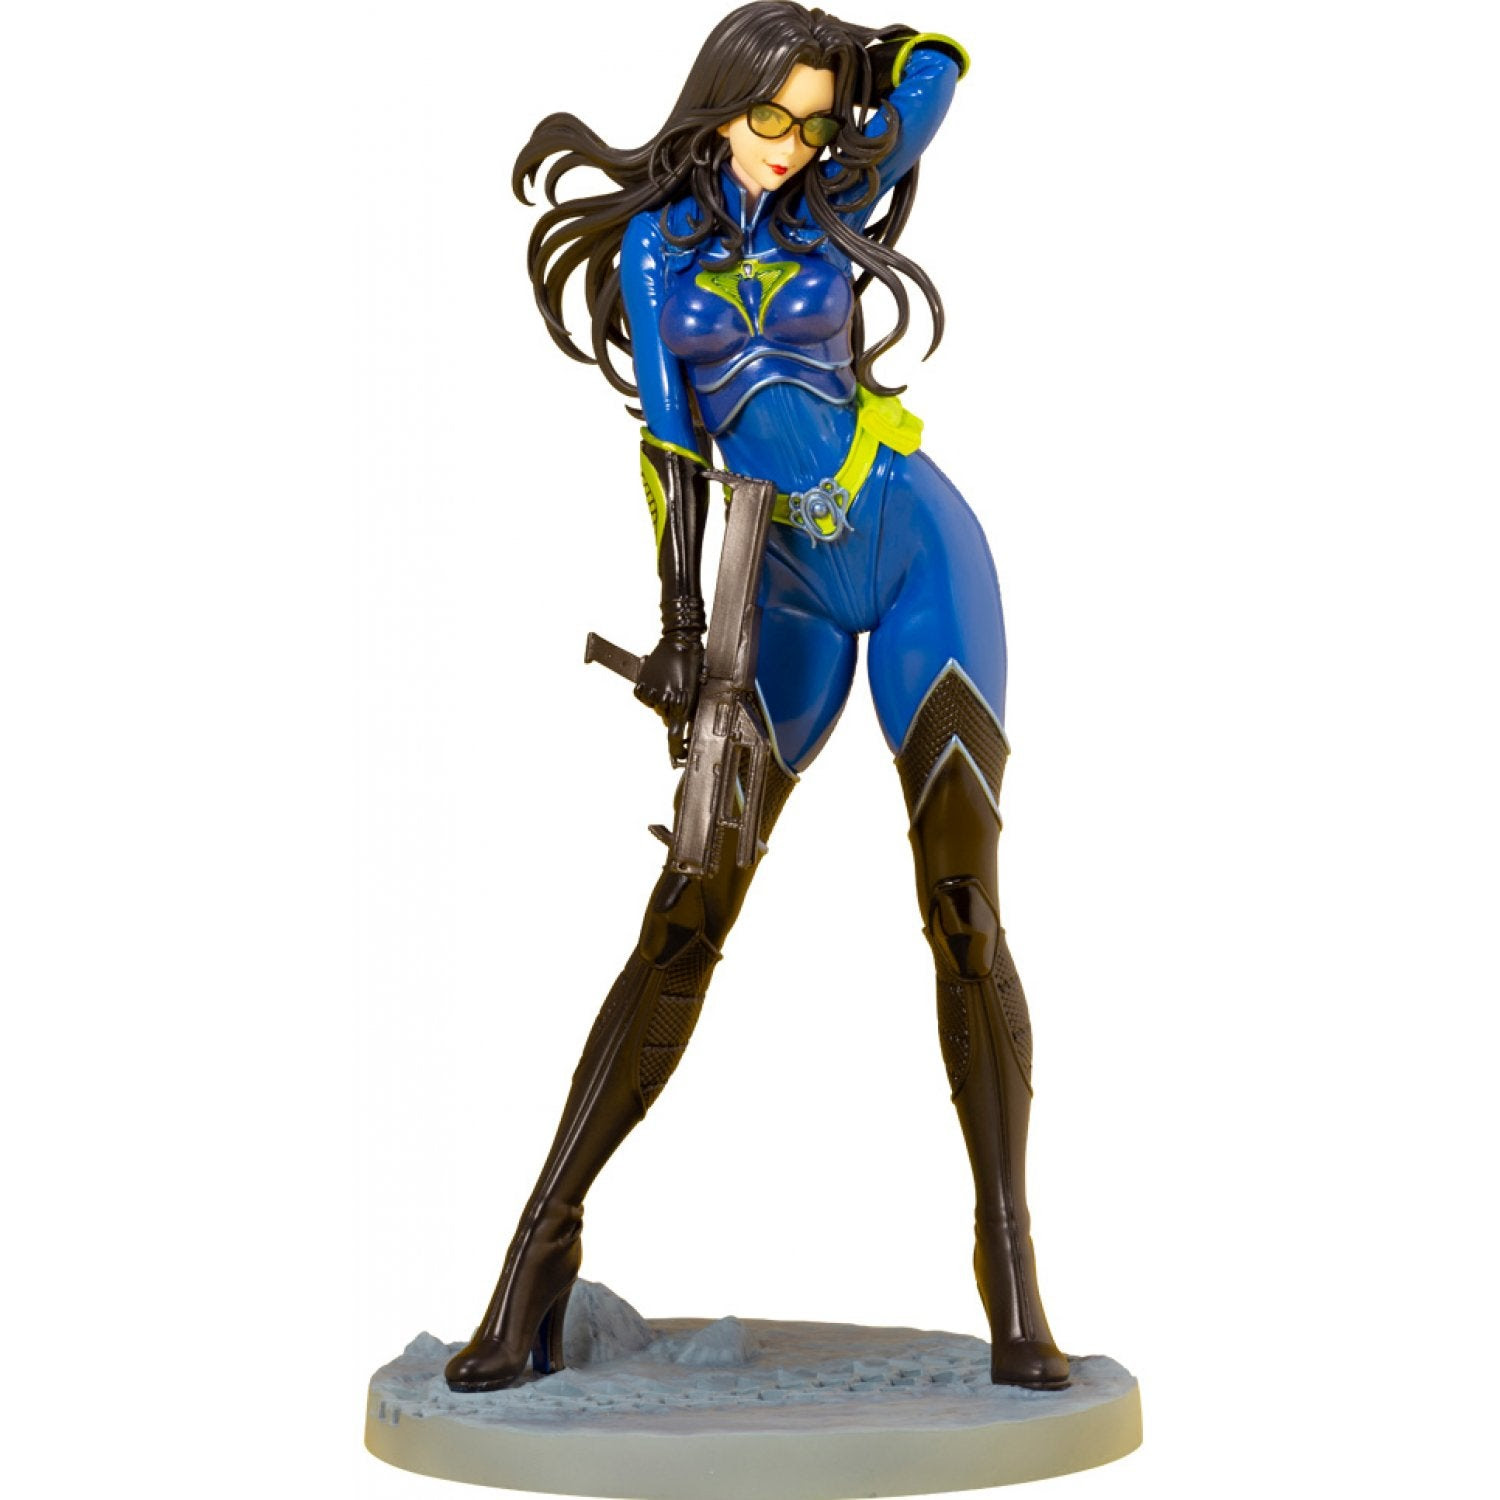 Image of G.I. Joe Baroness 25th Anniversary "Blue" Edition Bishoujo 1:7 Scale Statue - JULY 2020